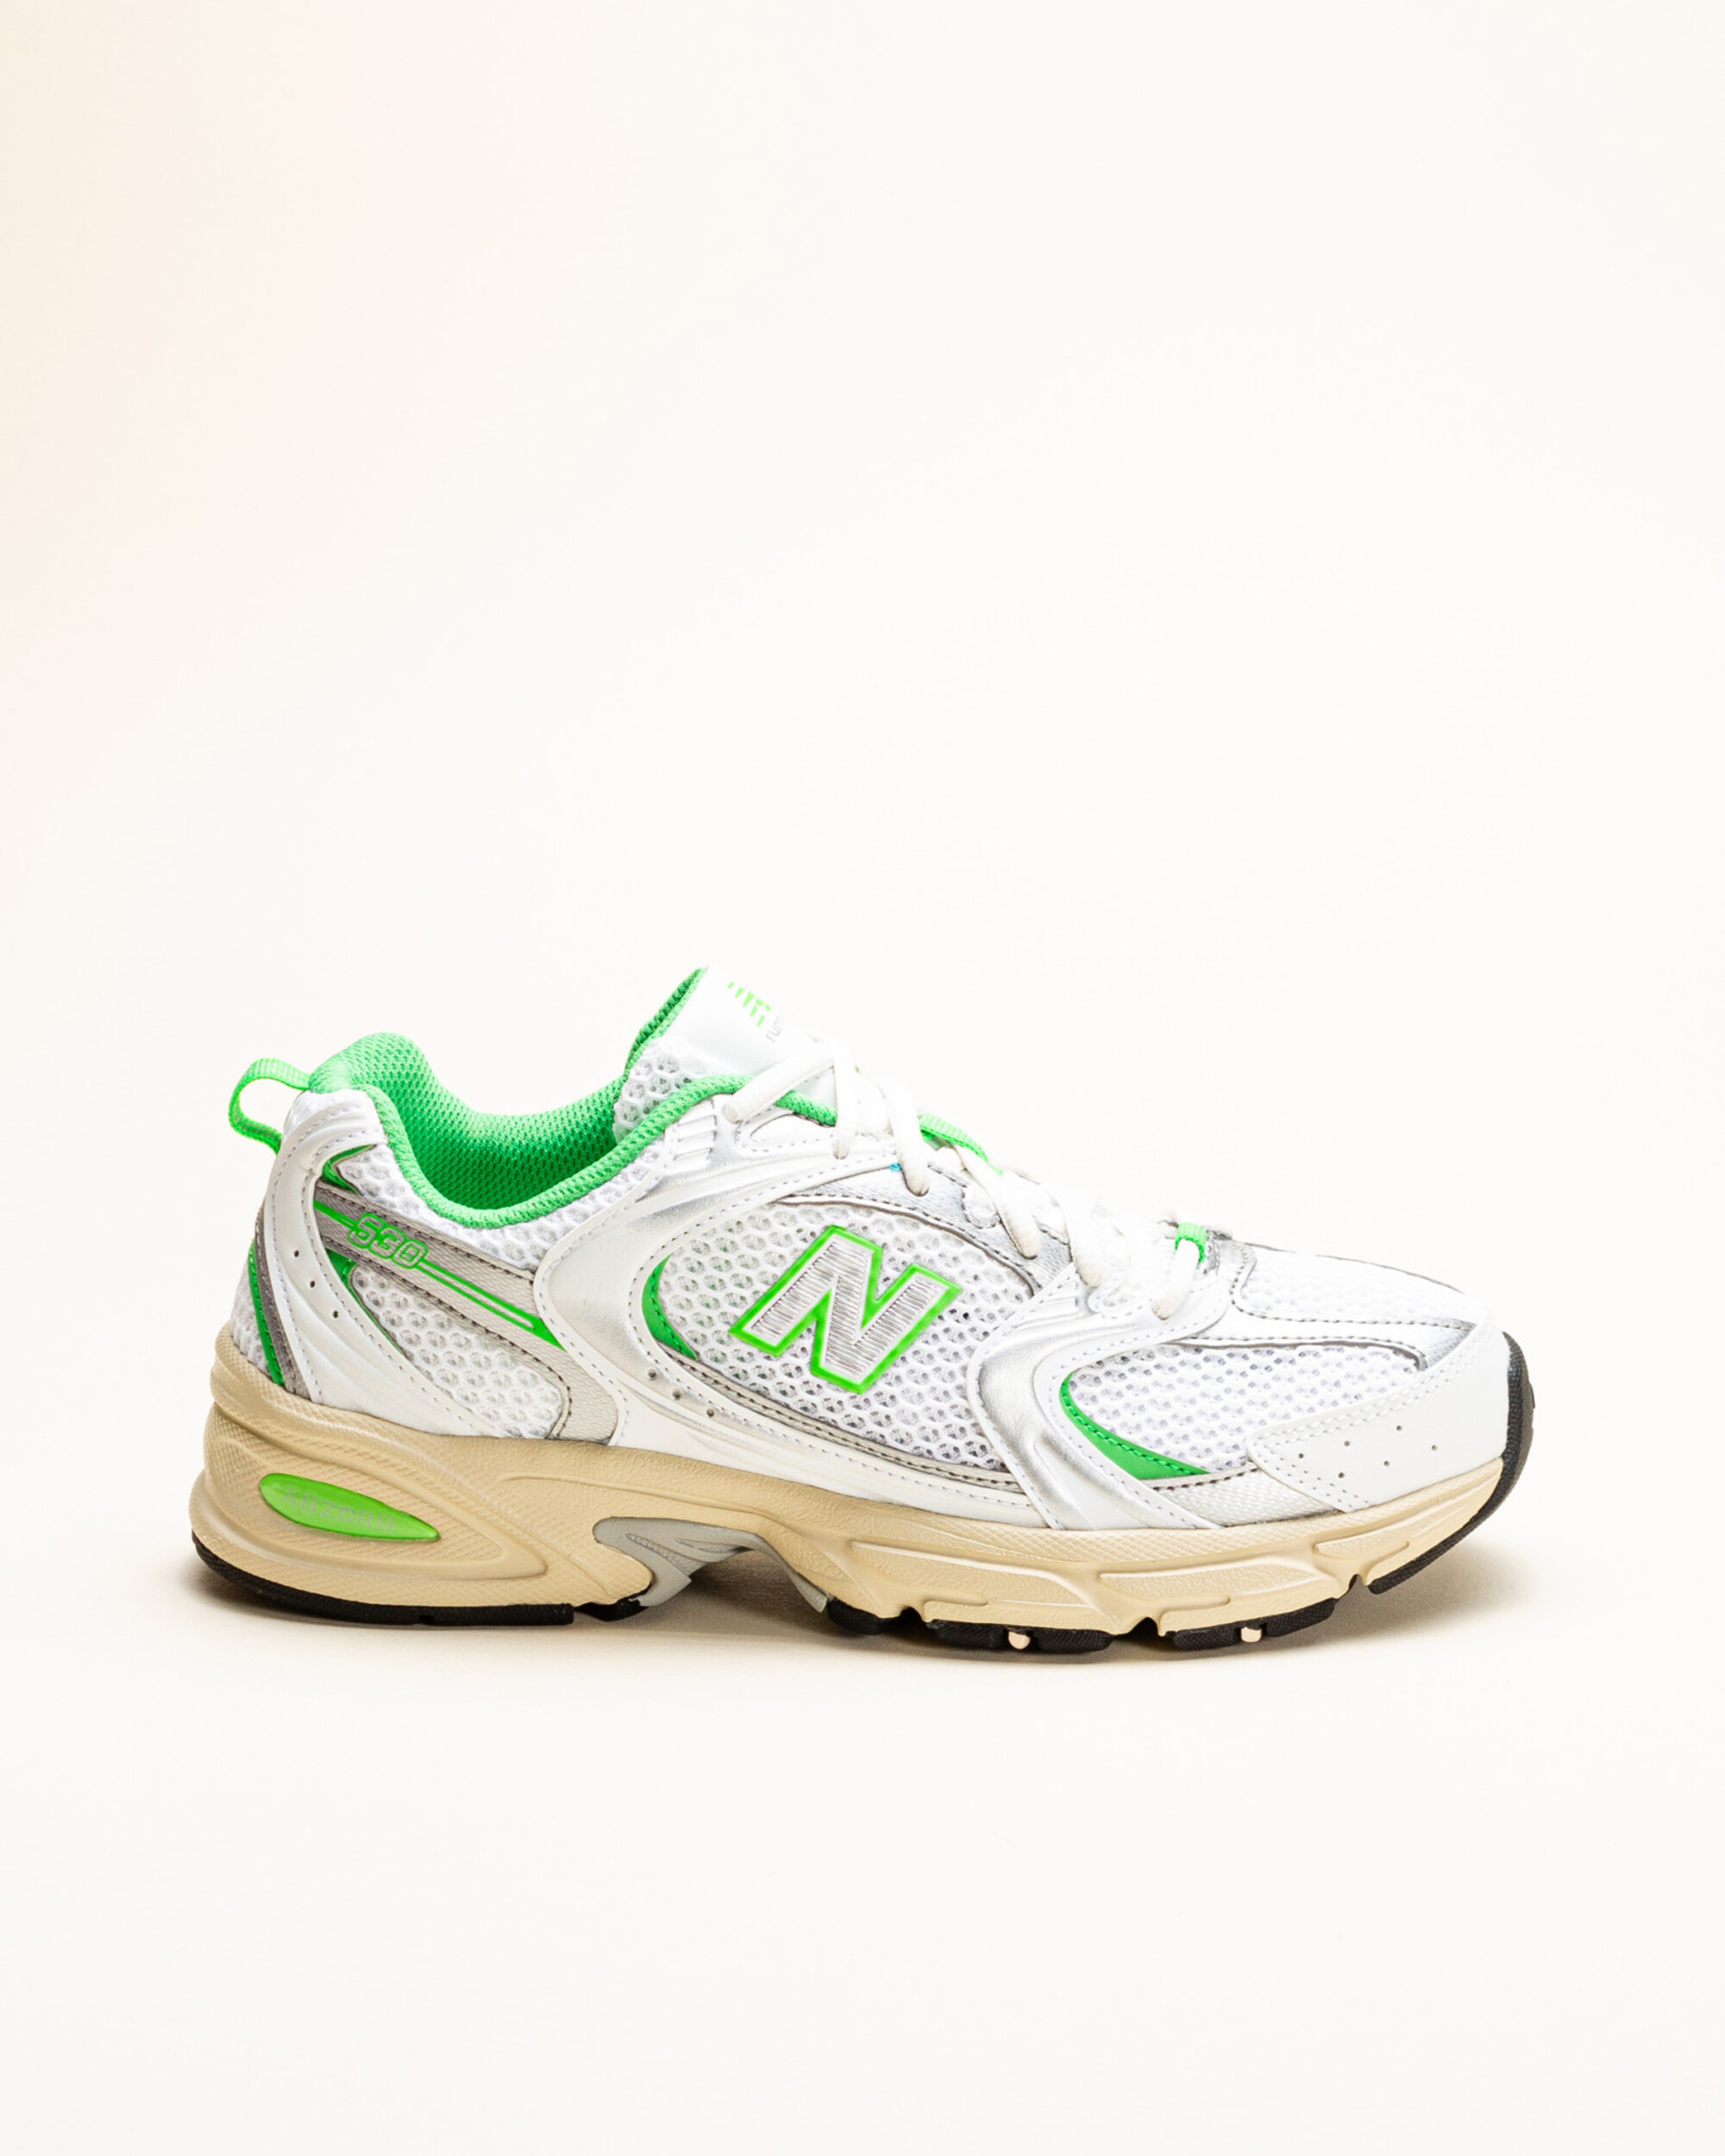 New Balance 530 - White/Green